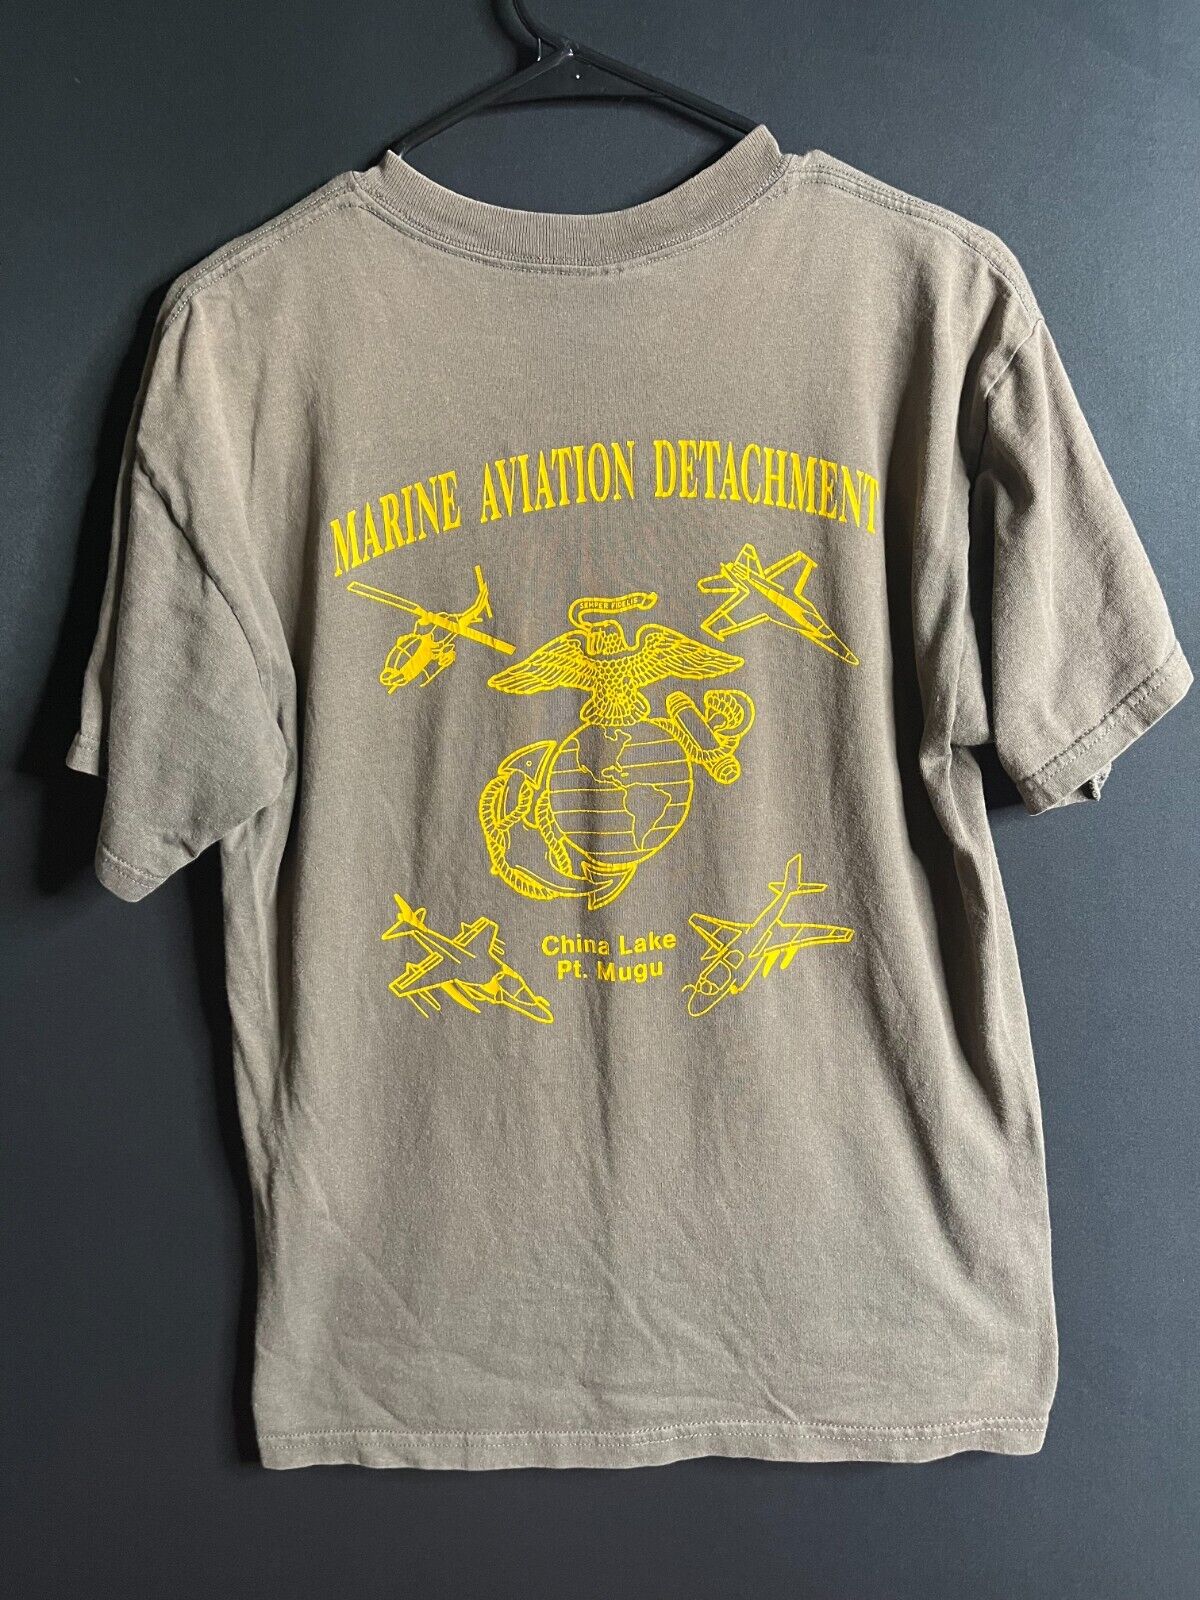 vintage marine shirt size M USMC army aviation distressed MAD china lake pt mugu